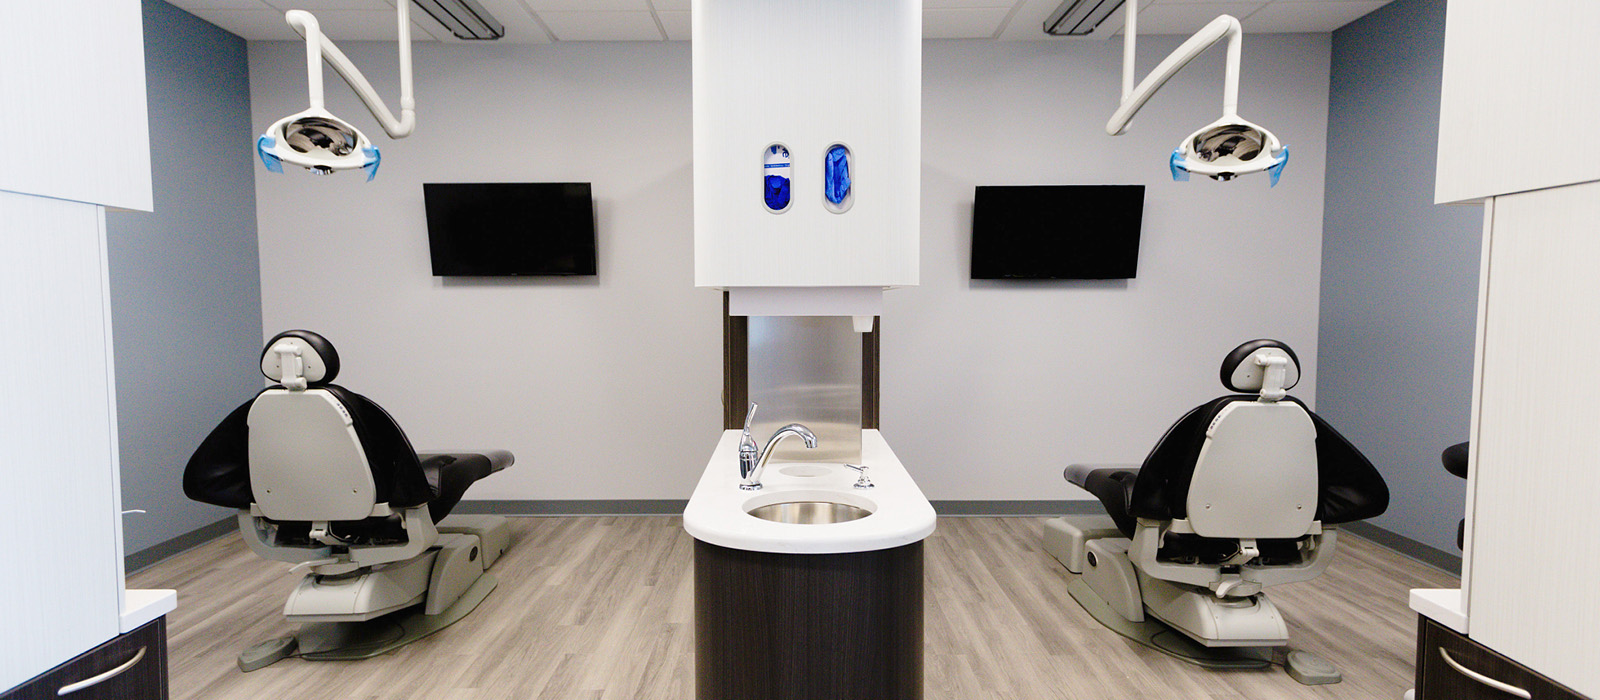 We Care Dental treatment room